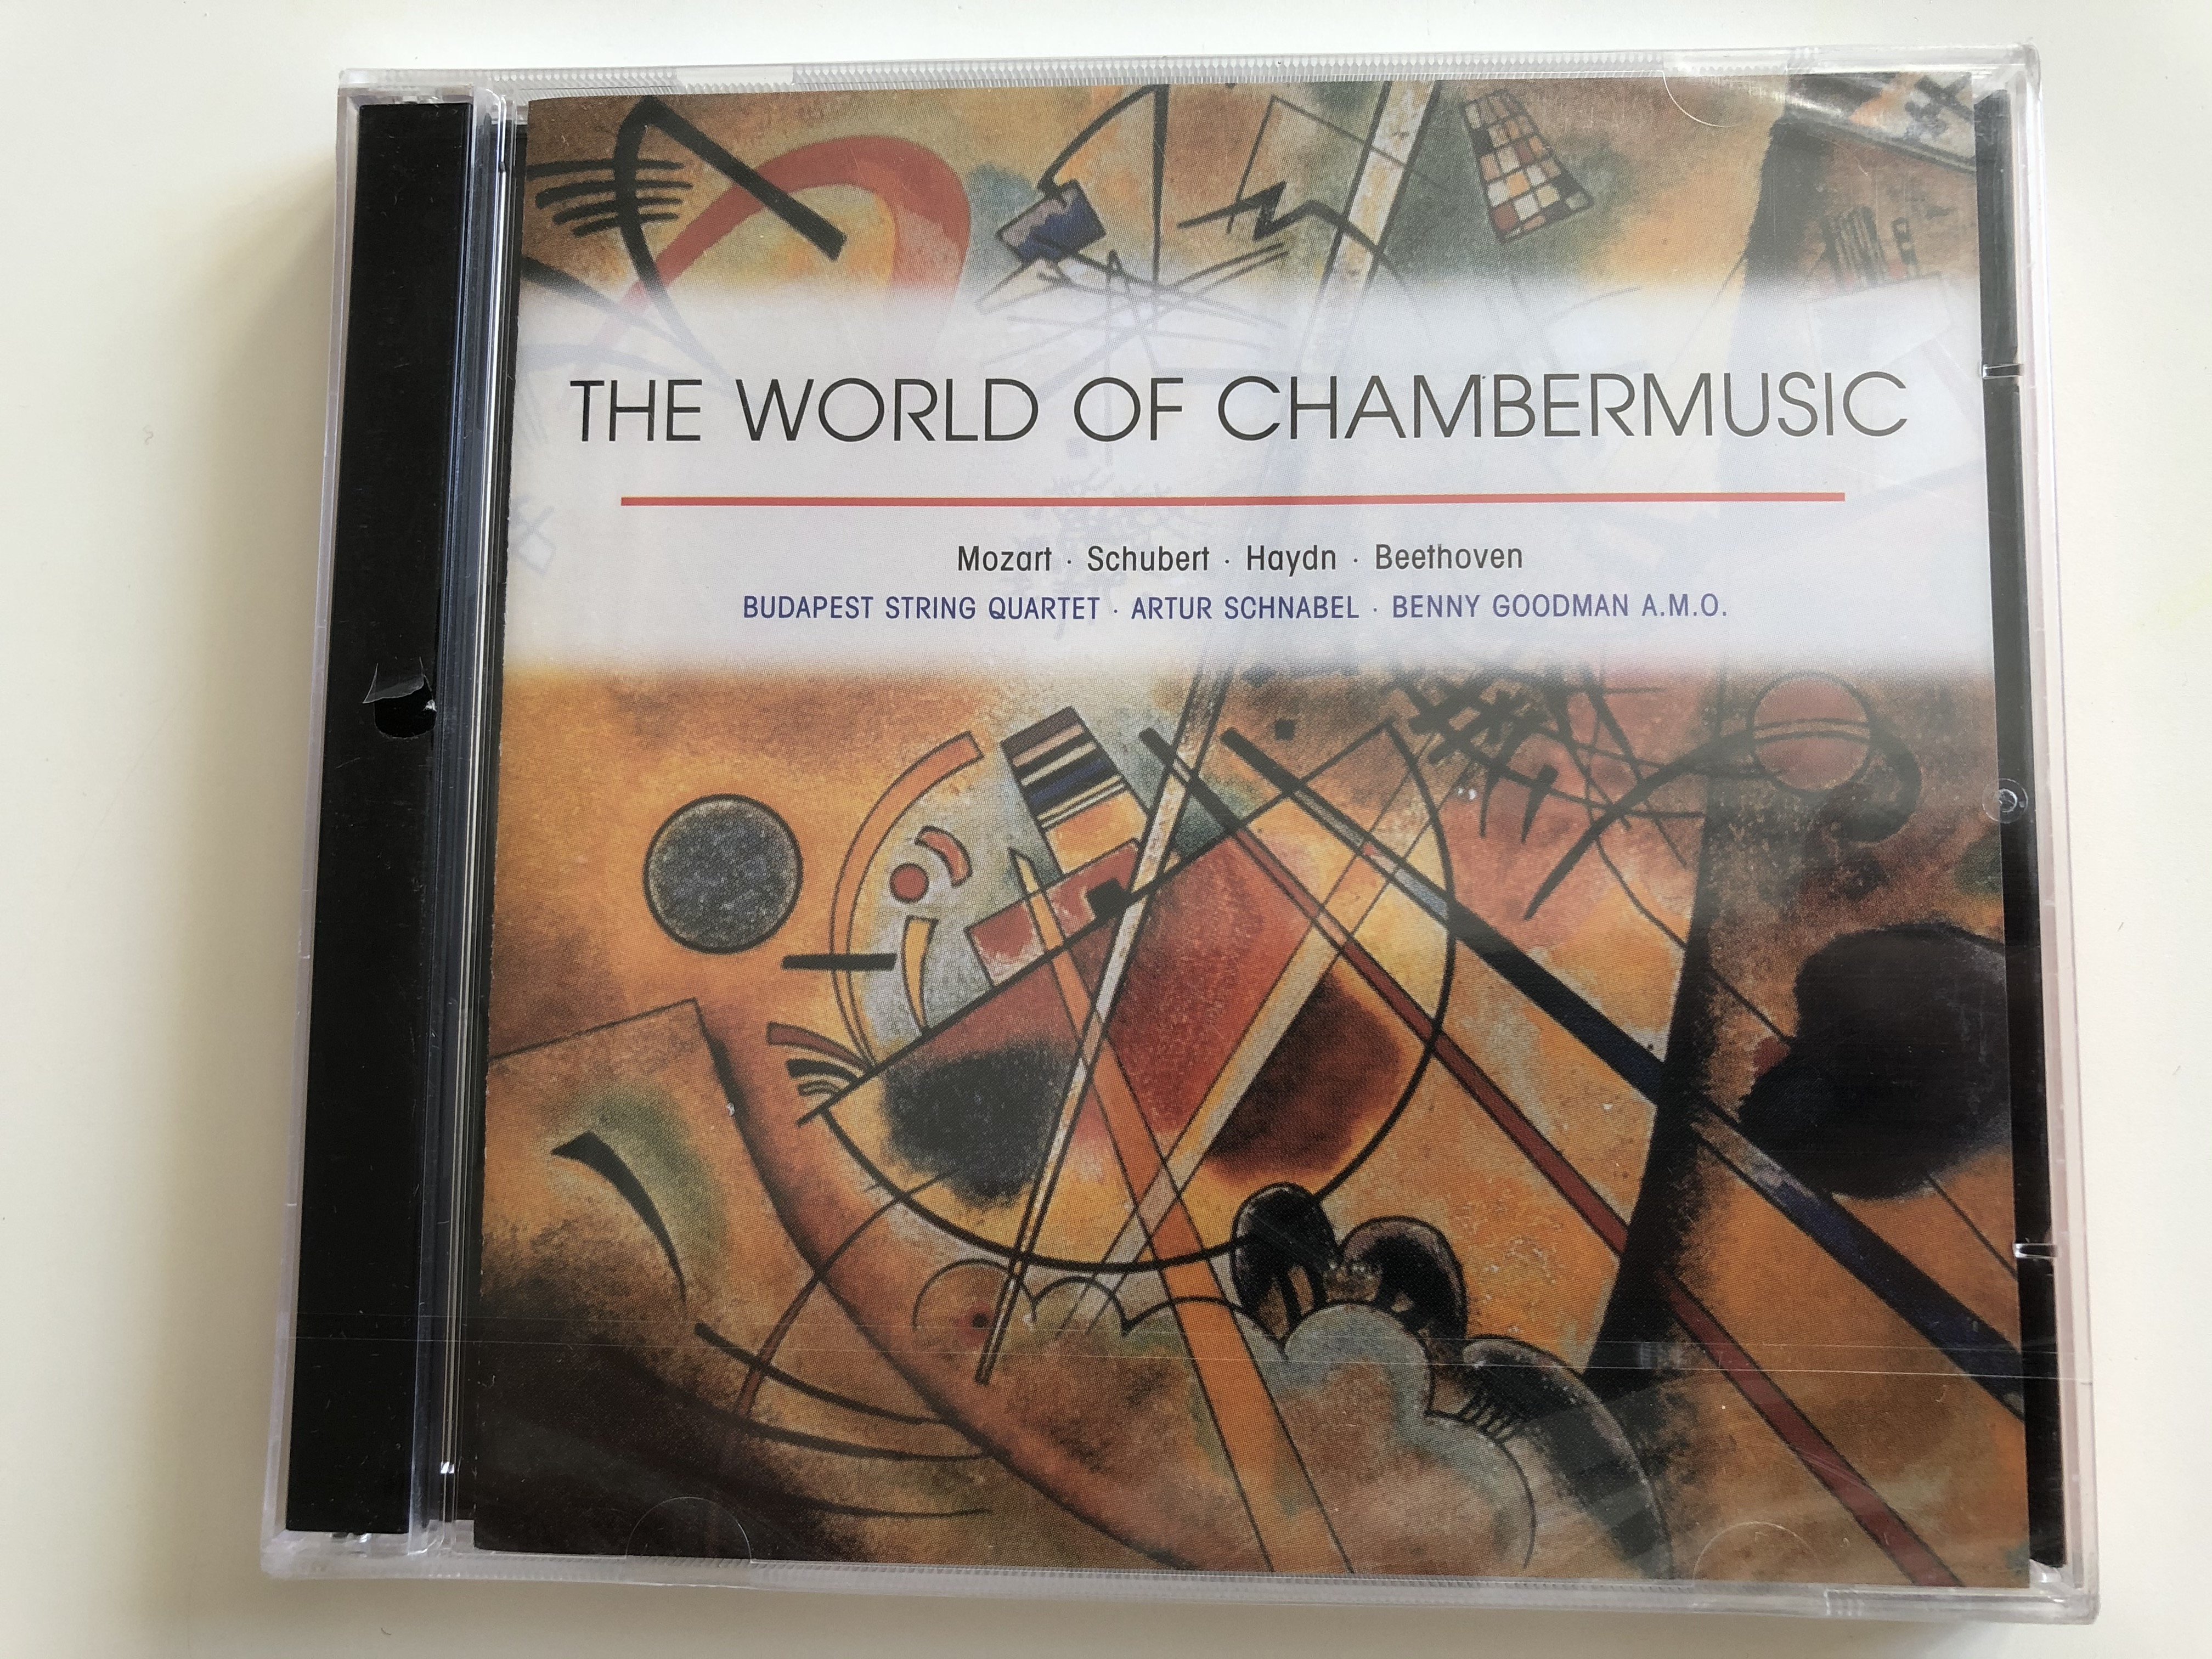 the-world-of-chambermusic-mozart-schubert-haydn-beethoven-budapest-string-quartet-artur-schnabel-benny-goodman-a.-m.-o.-tim-cz-3x-audio-cd-2003-221479-349-1-.jpg